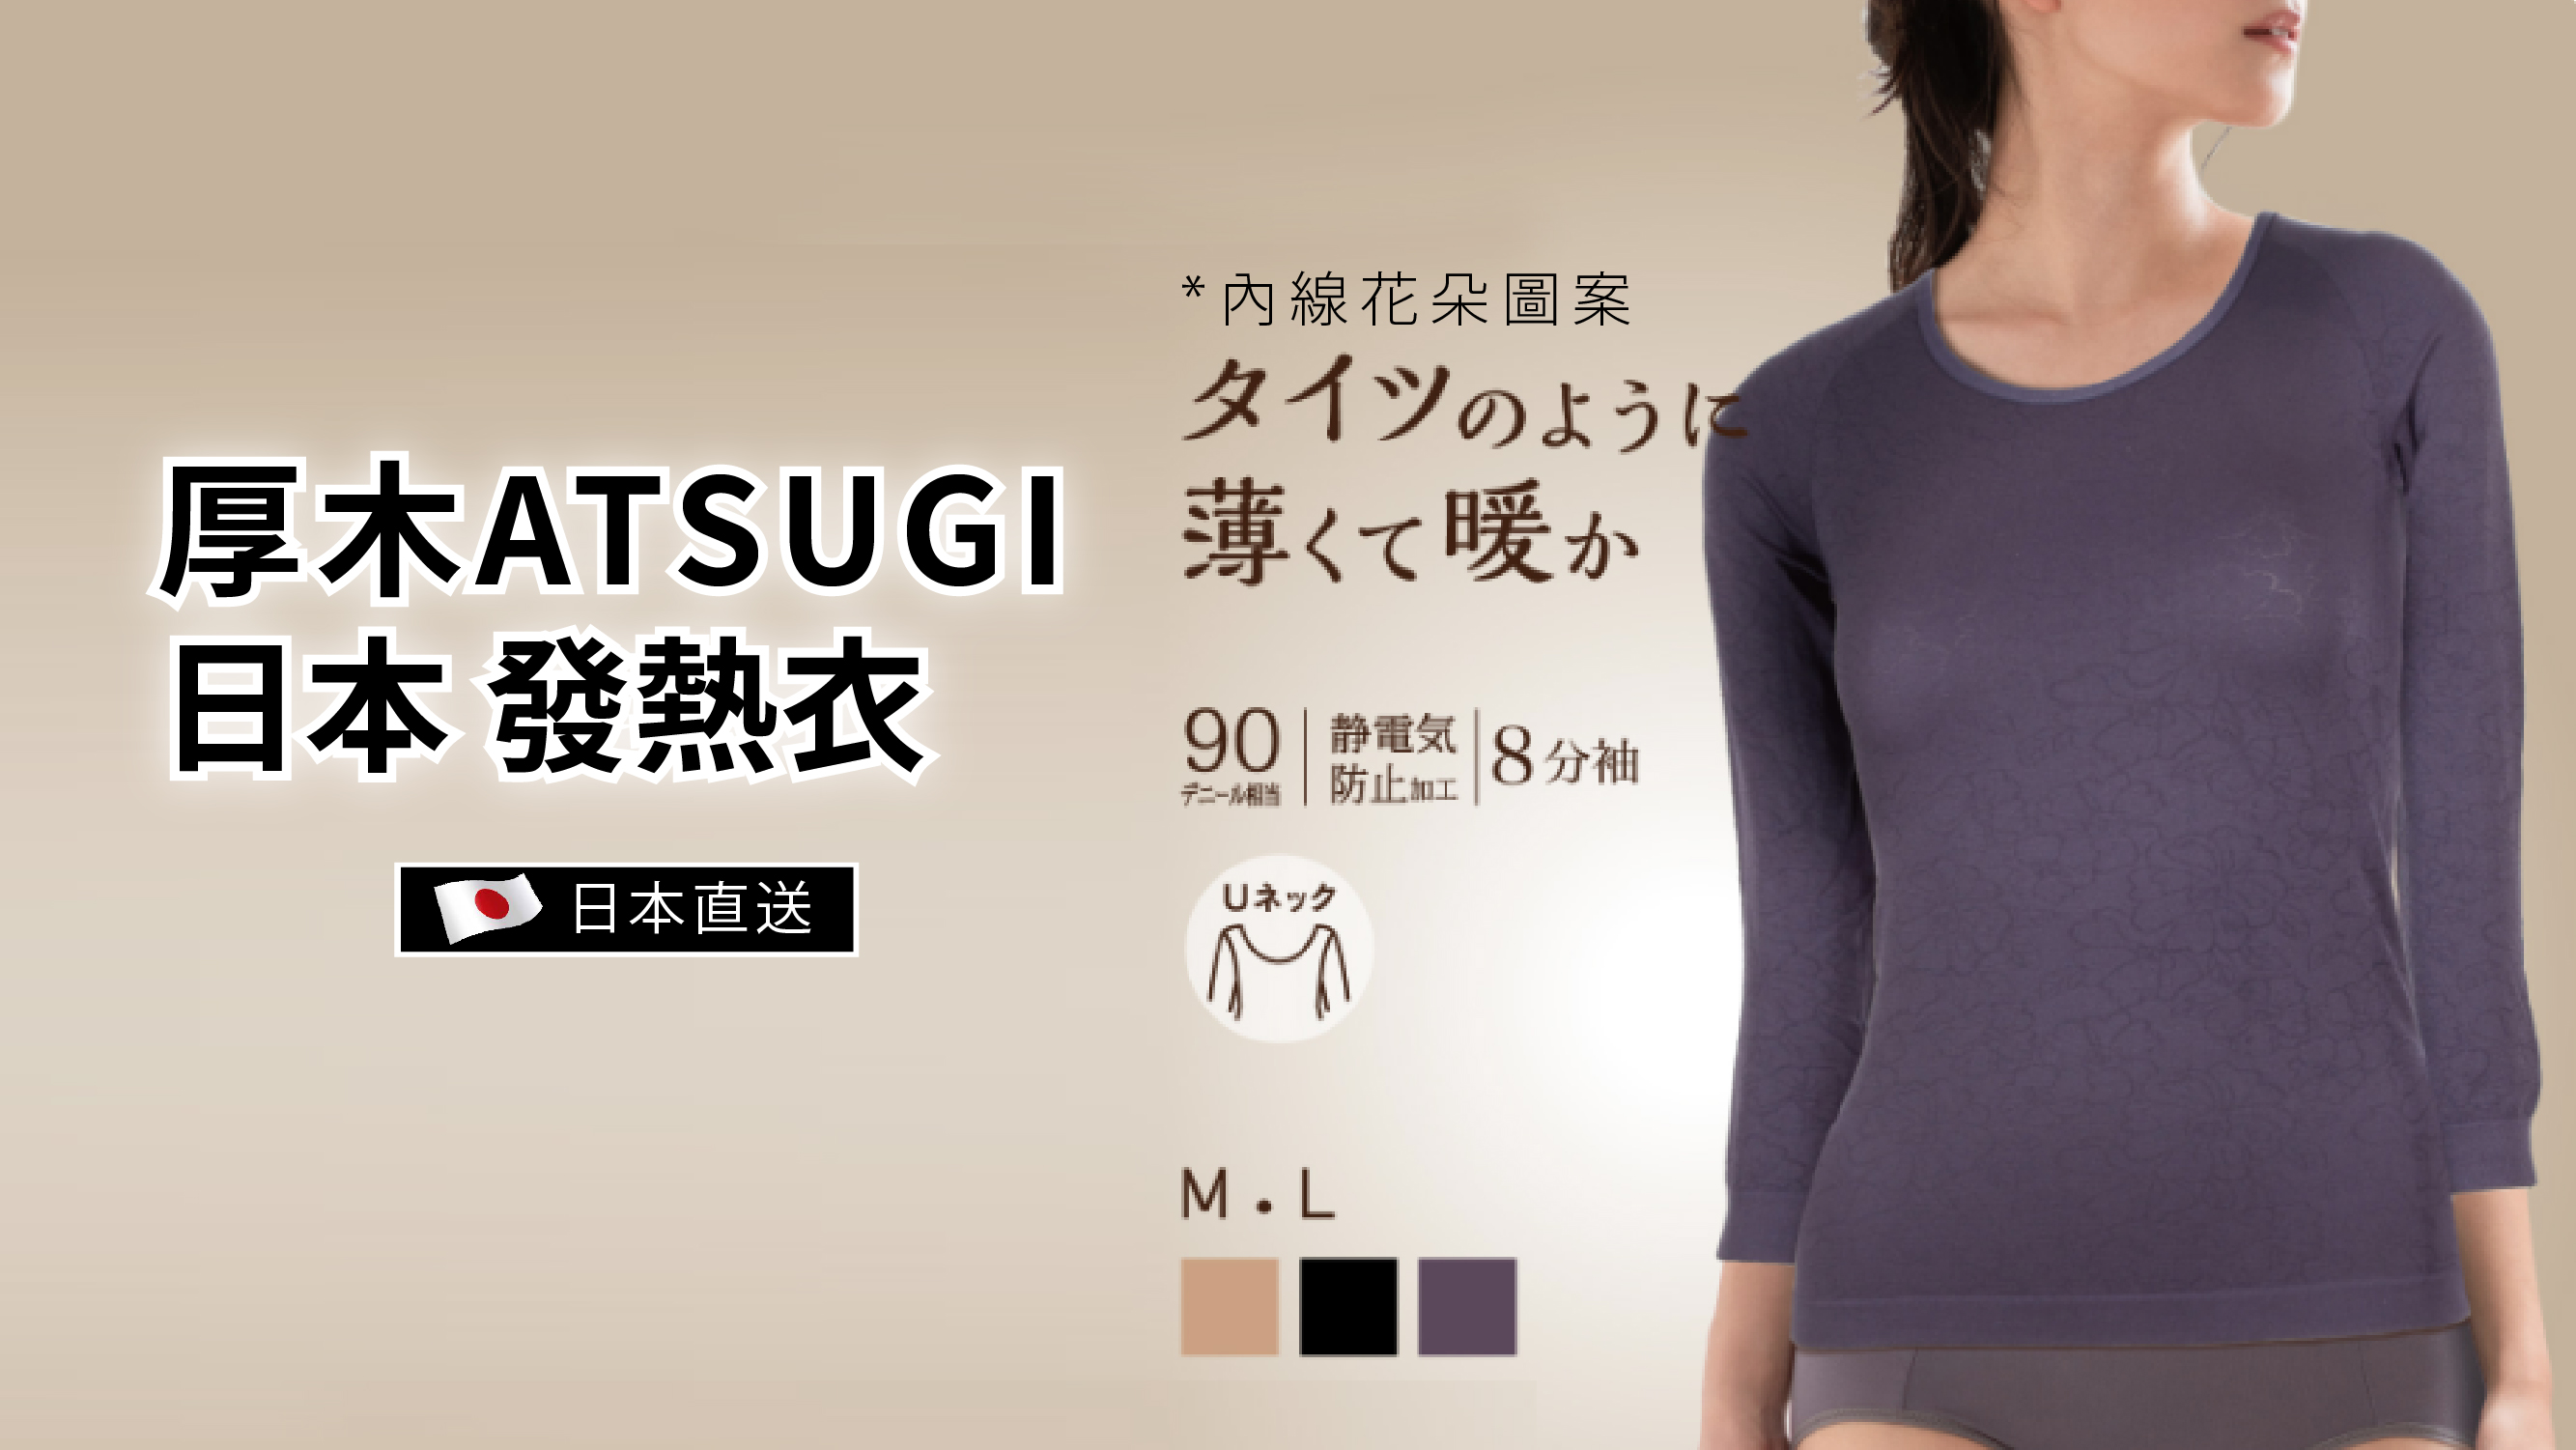 Atsugi ATSUGI Japan Delivery anti-static heating jacket women U neck 8 sleeves inner line flower pat